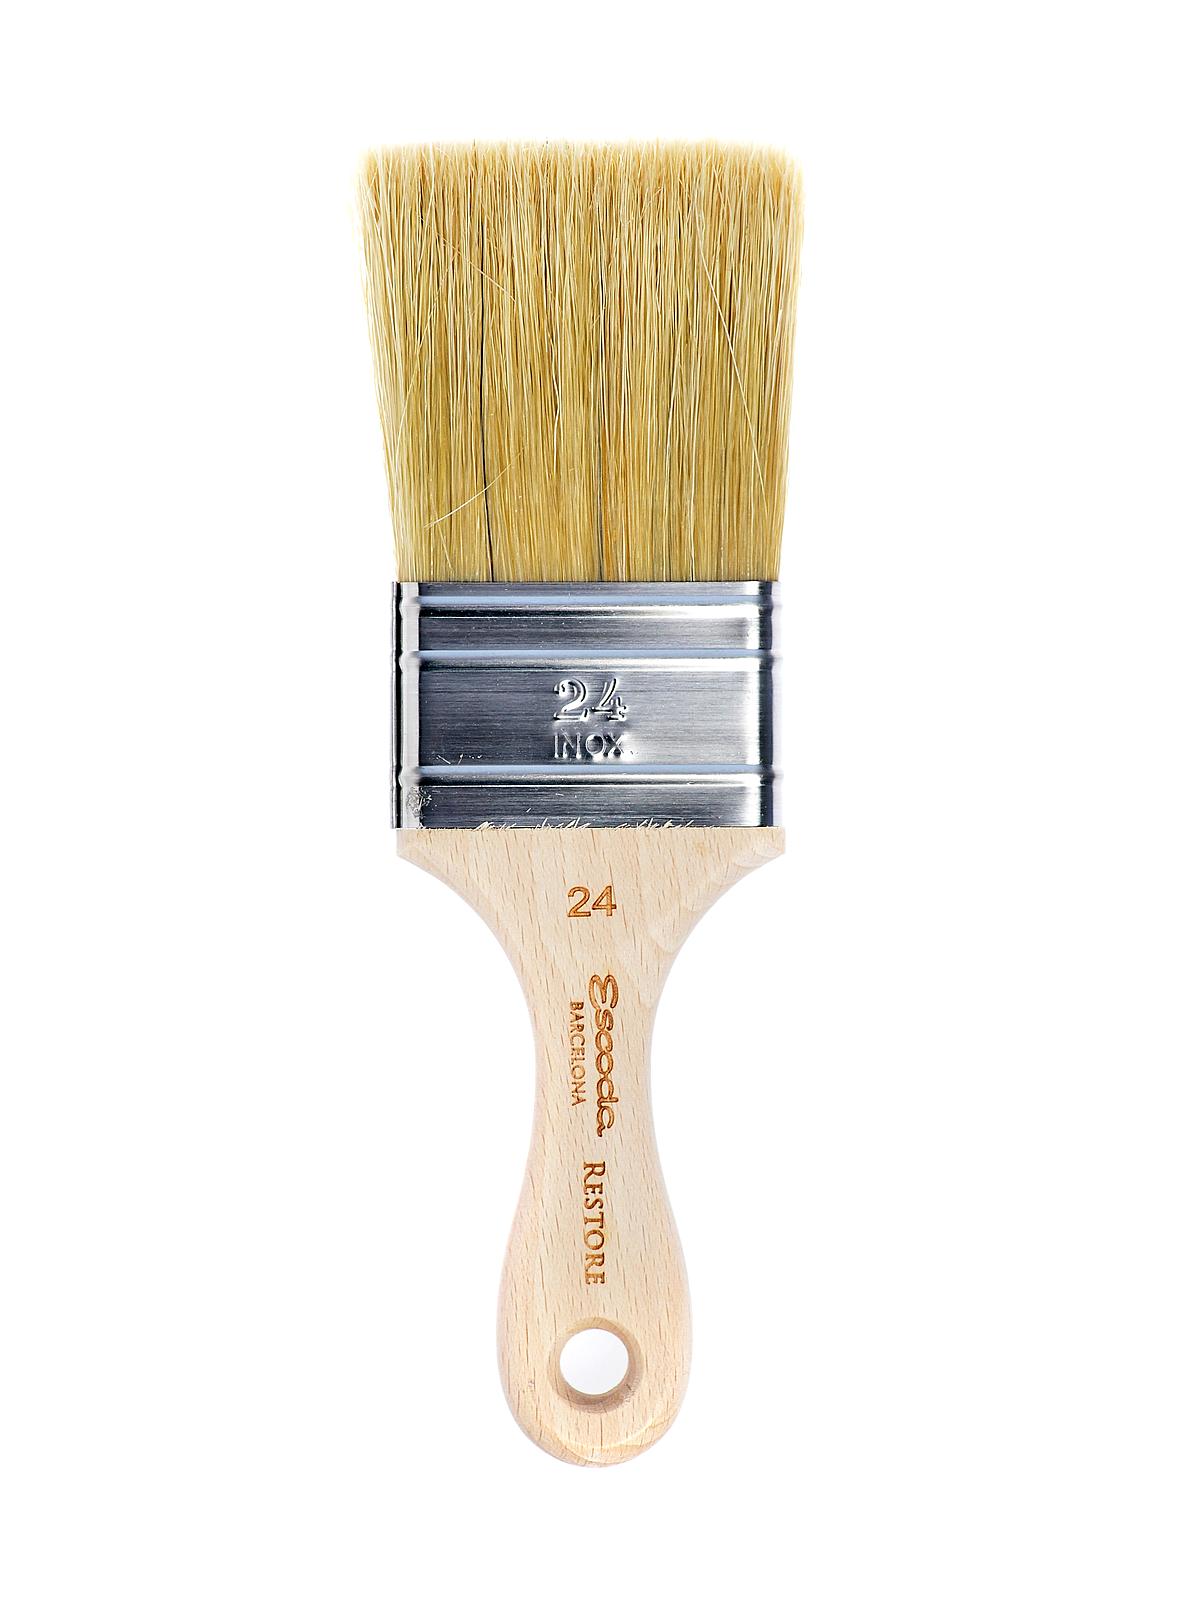 Restore Chalk Brushes 8401-24 Short Bristle 24